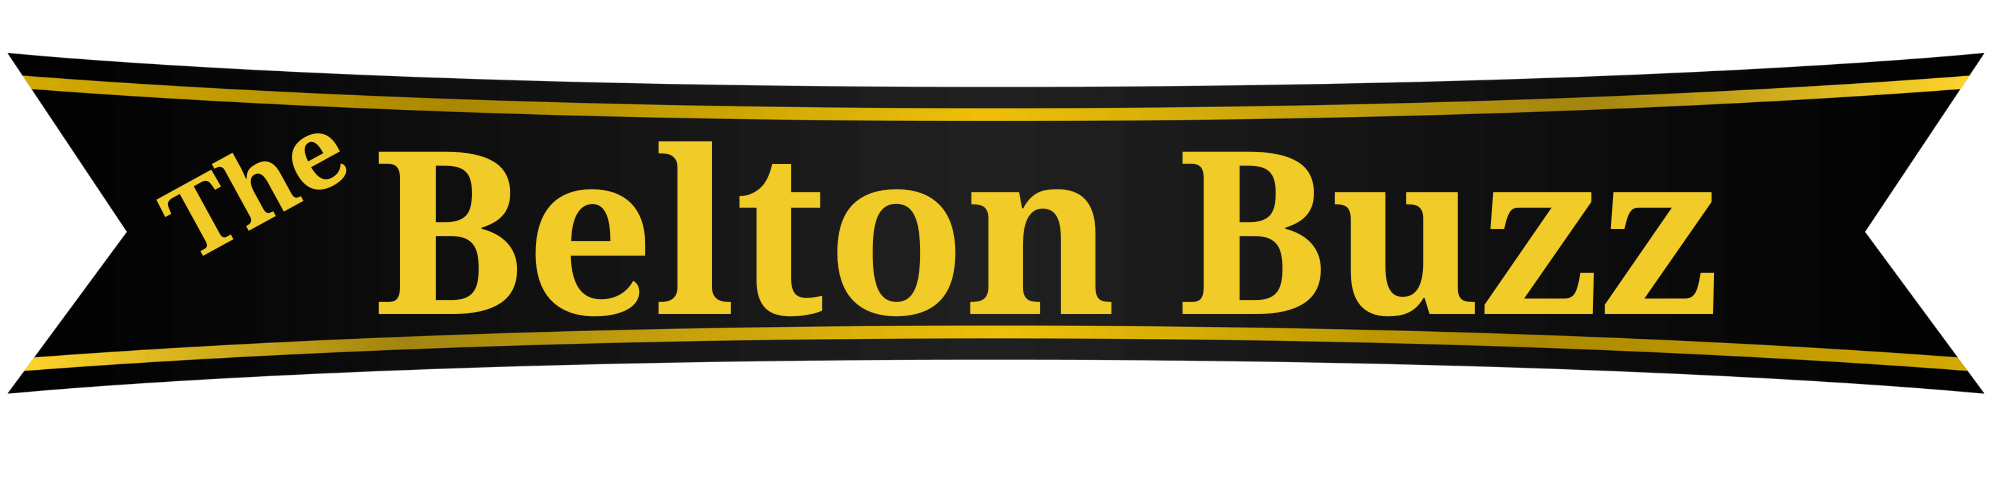 The Belton Buzz